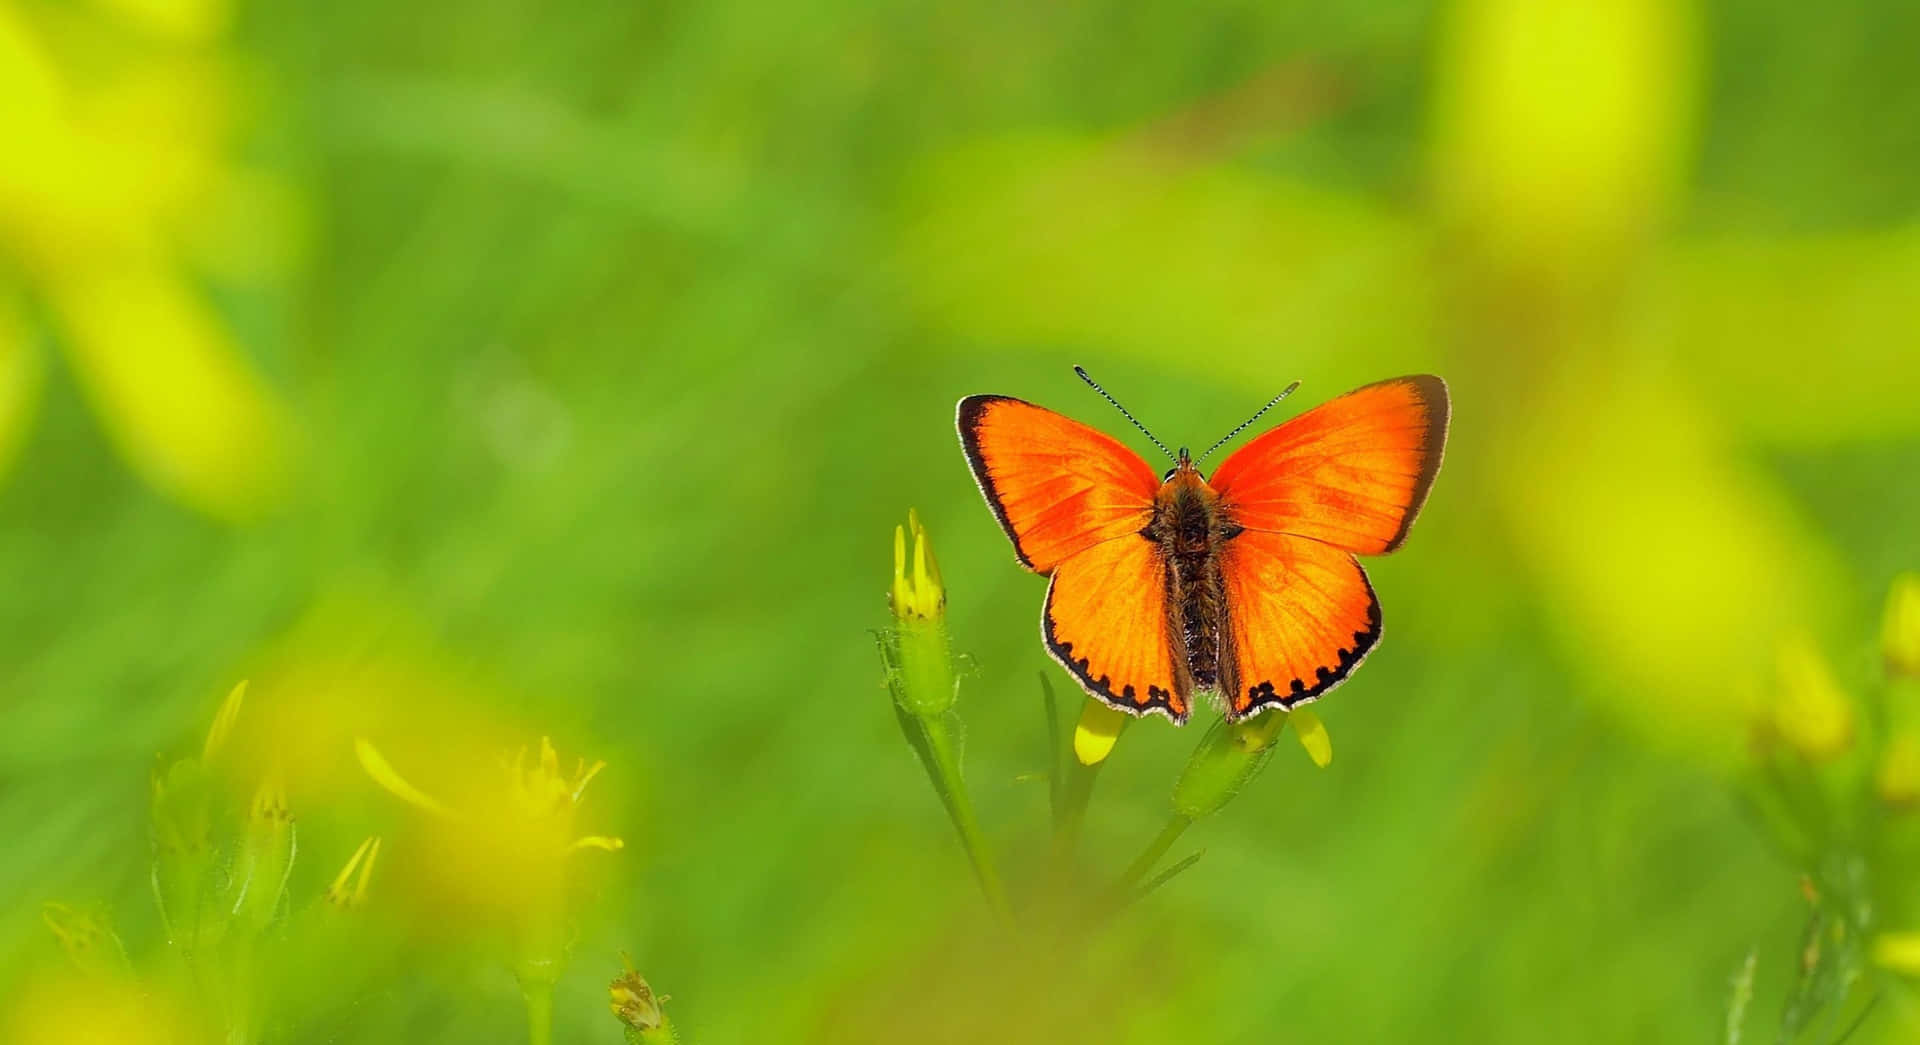 A Butterfly Is Sitting On A Green Field